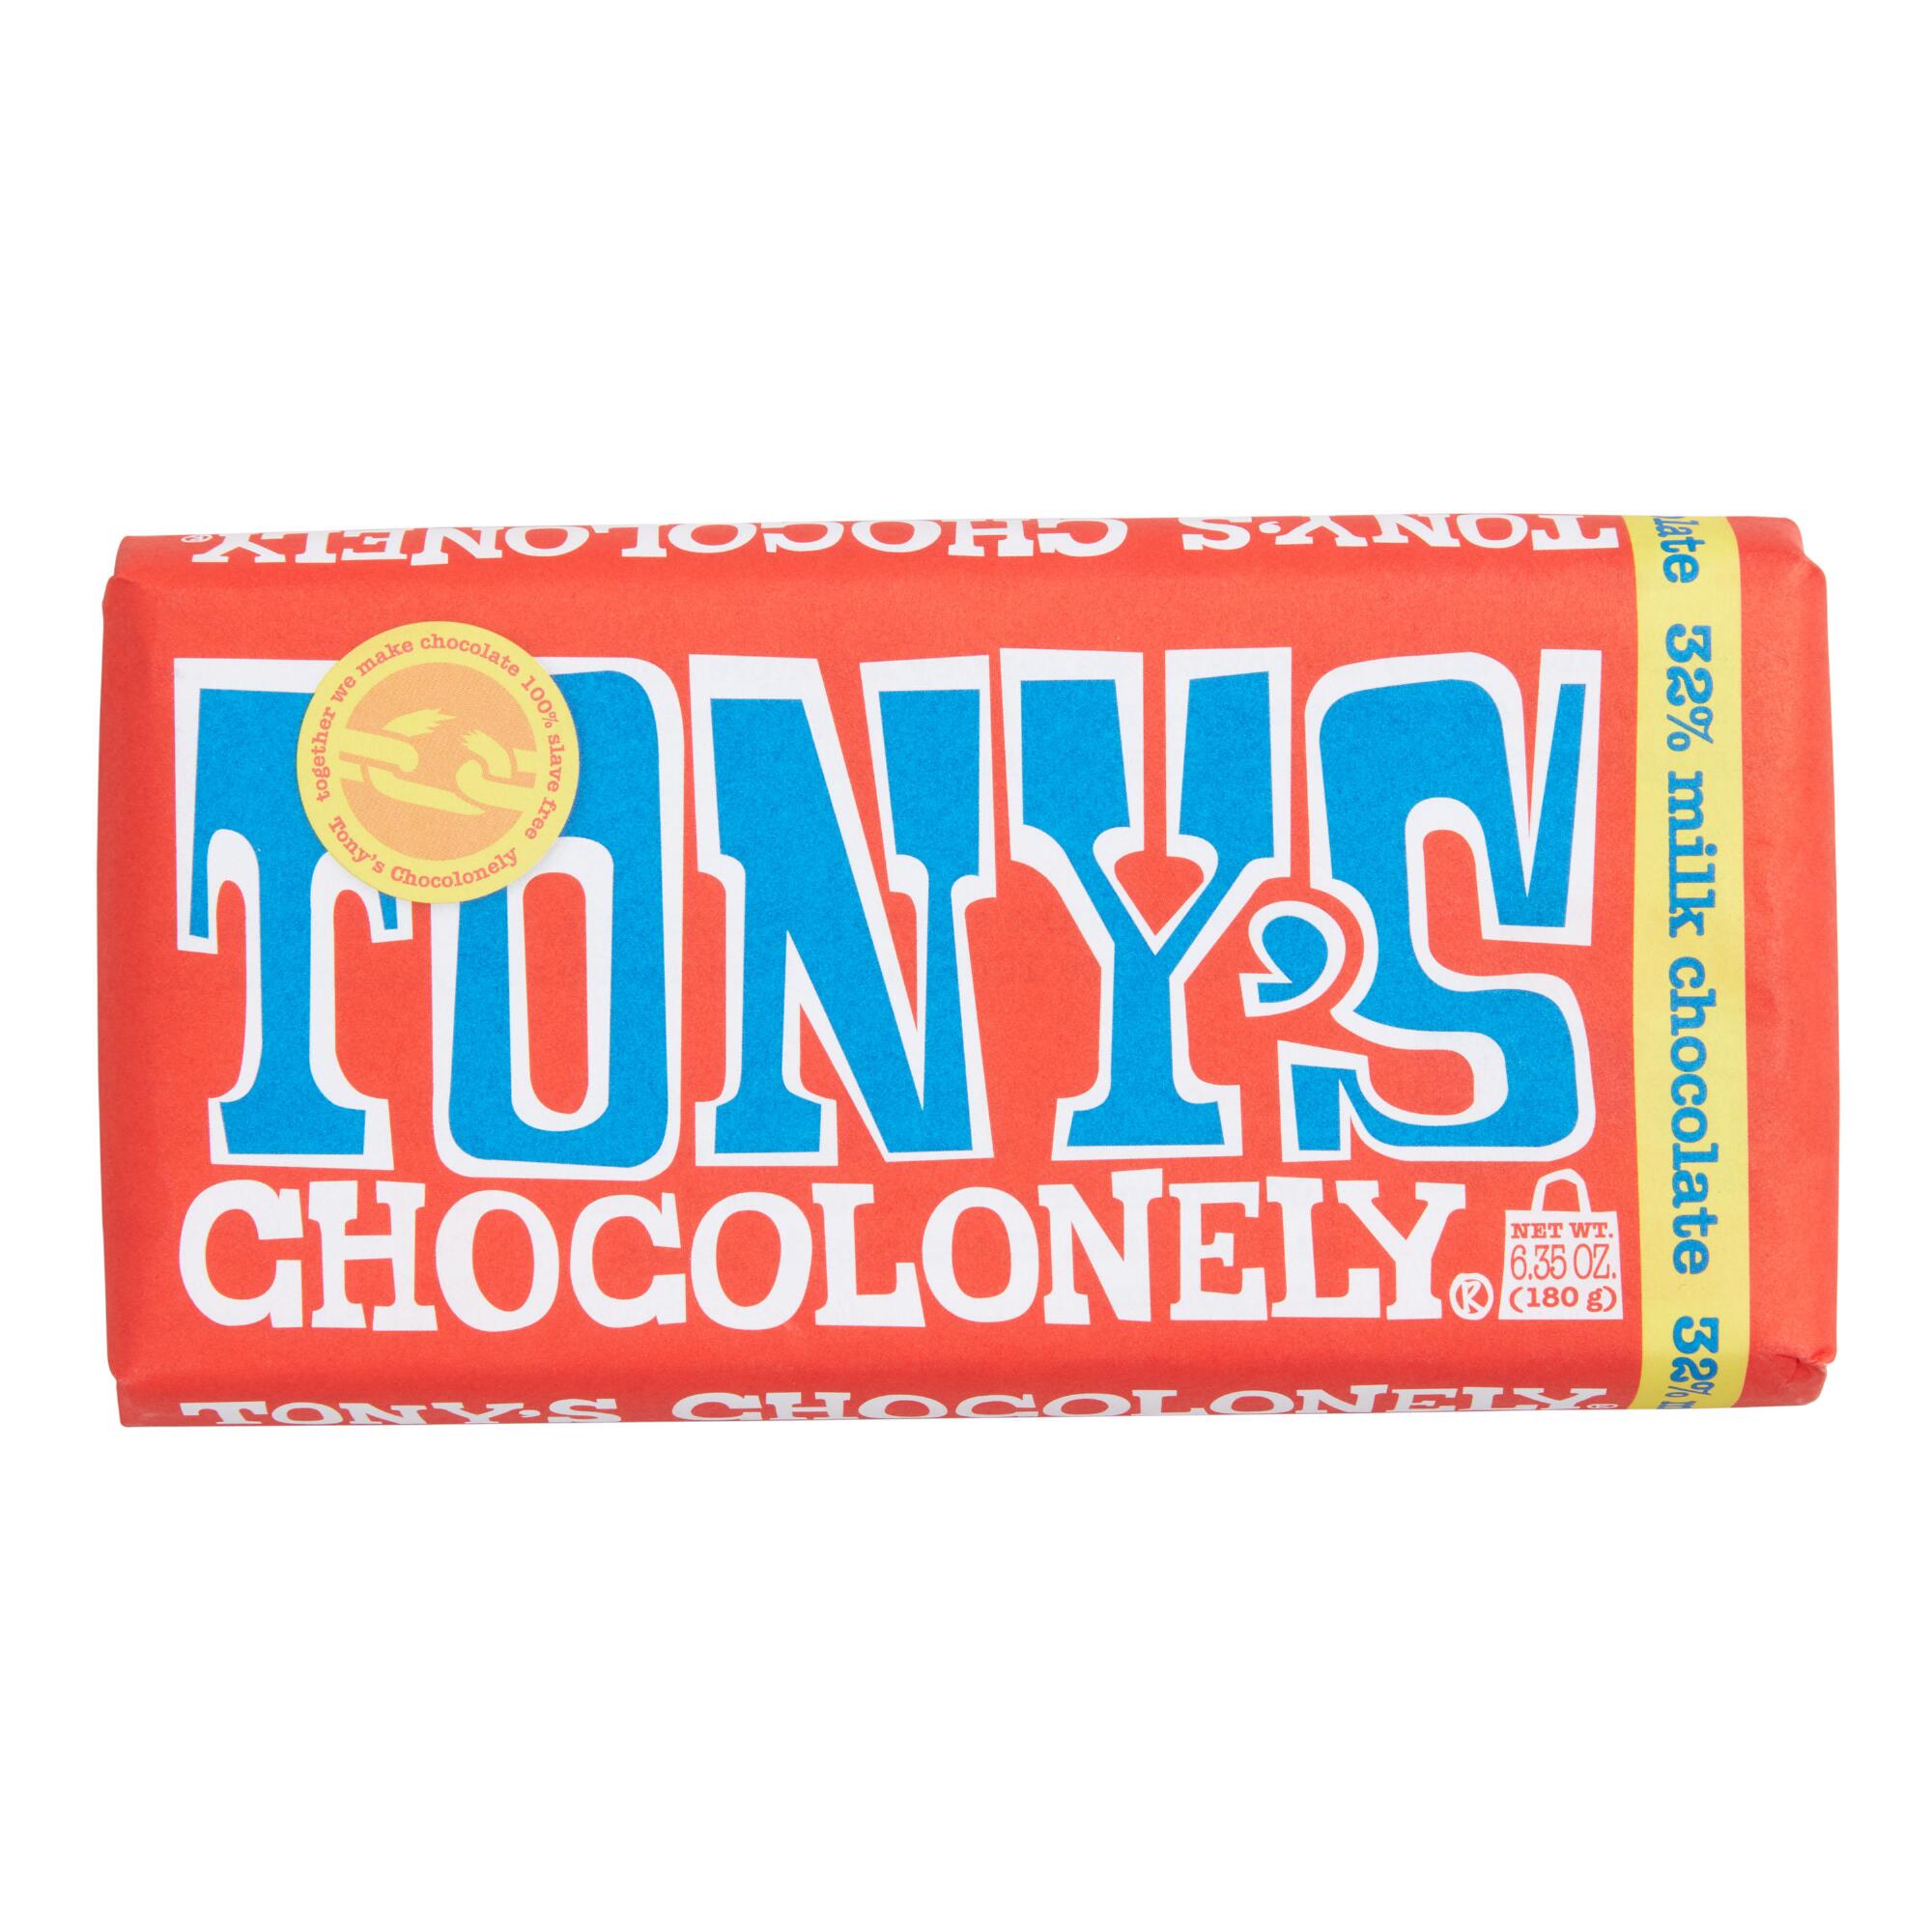 Tonys Chocolonely Milk Chocolate Bar by World Market